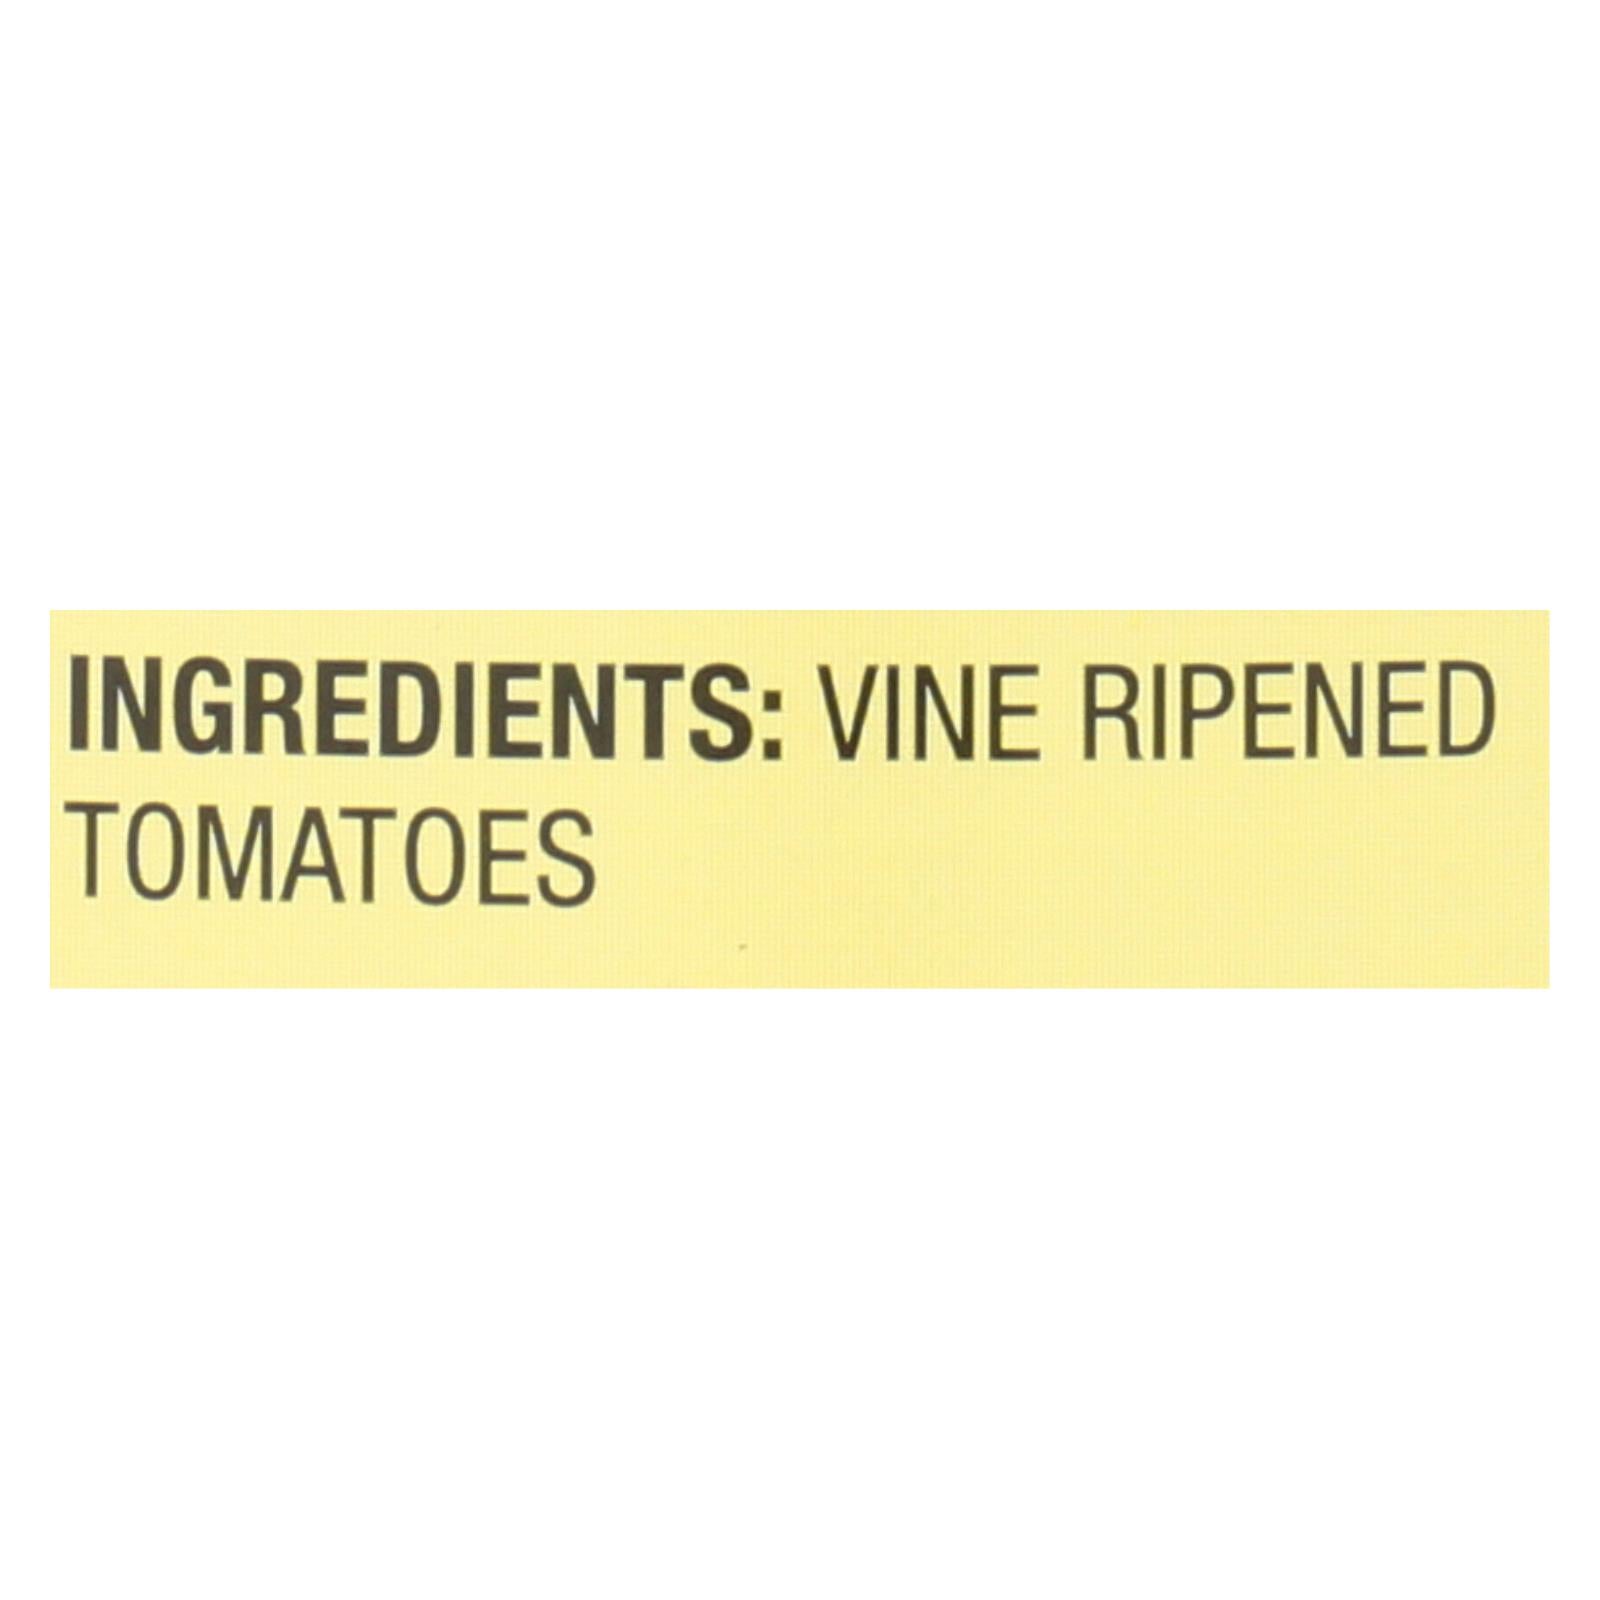 Cento Tomatoes - Crushed - Case Of 12 - 28 Oz